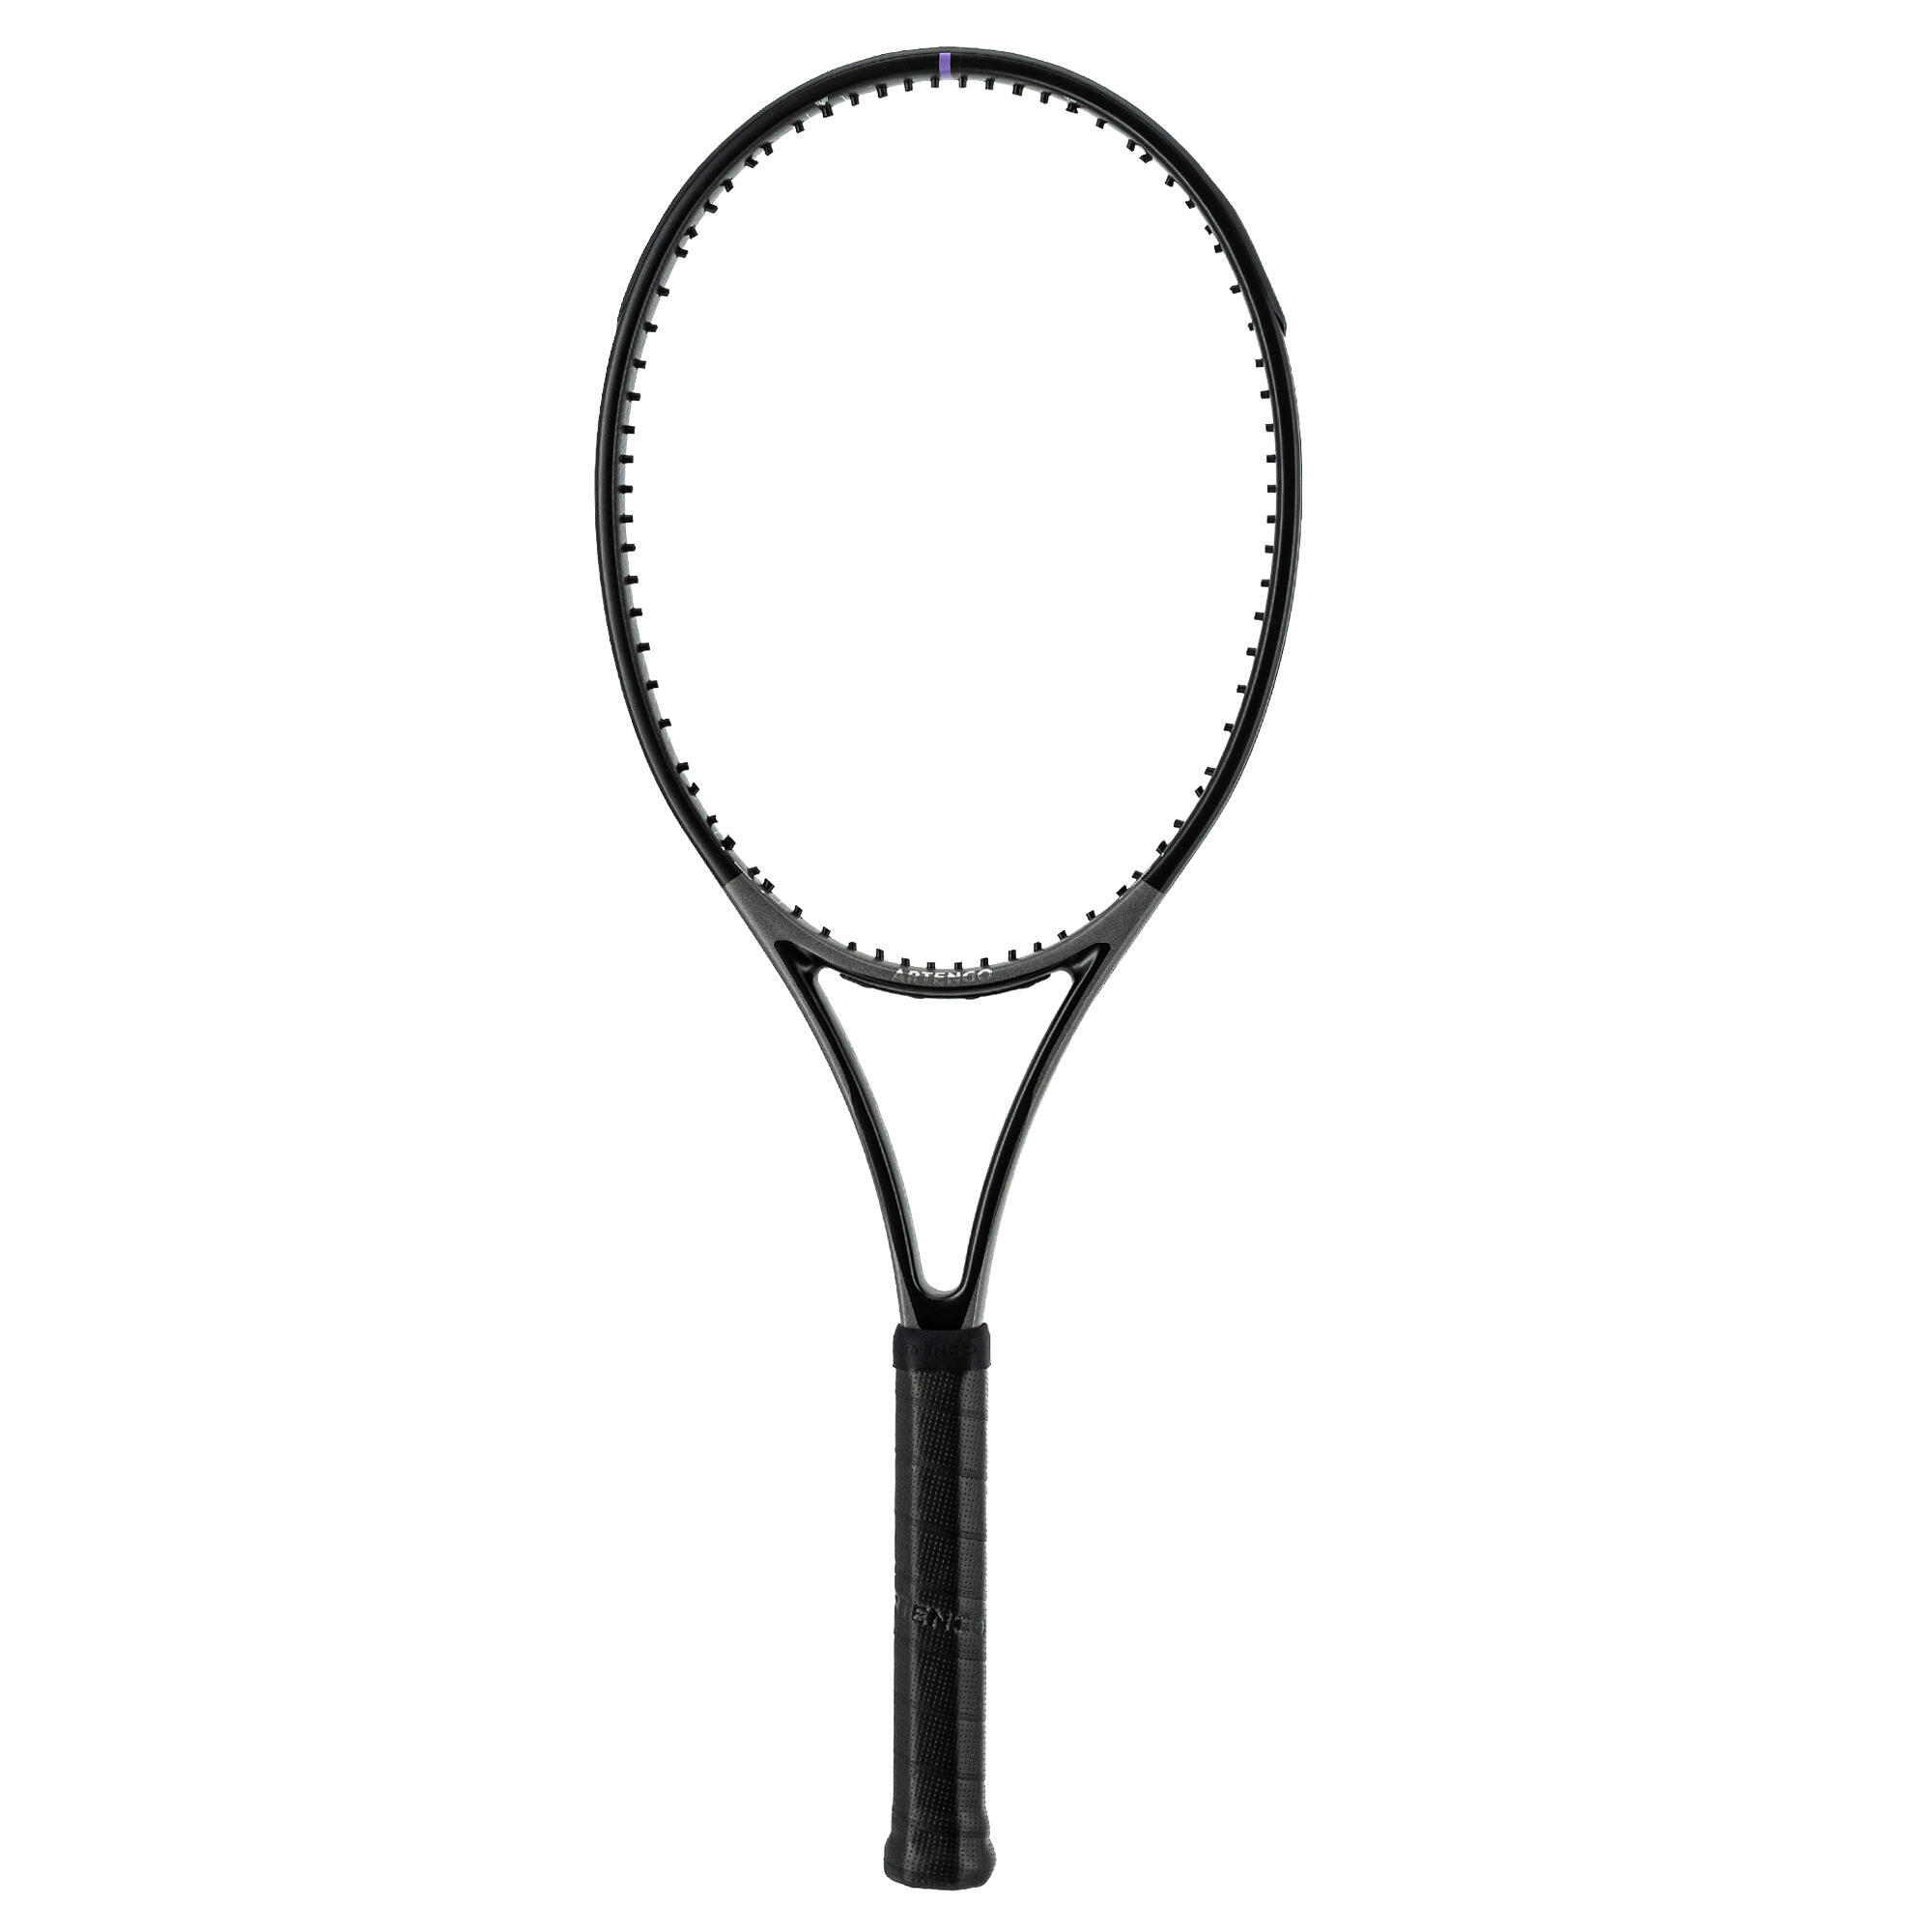 Adult Tennis Racket Control Tour TR960 18x20 Unstrung - Grey - GAËL MONFILS 11/17